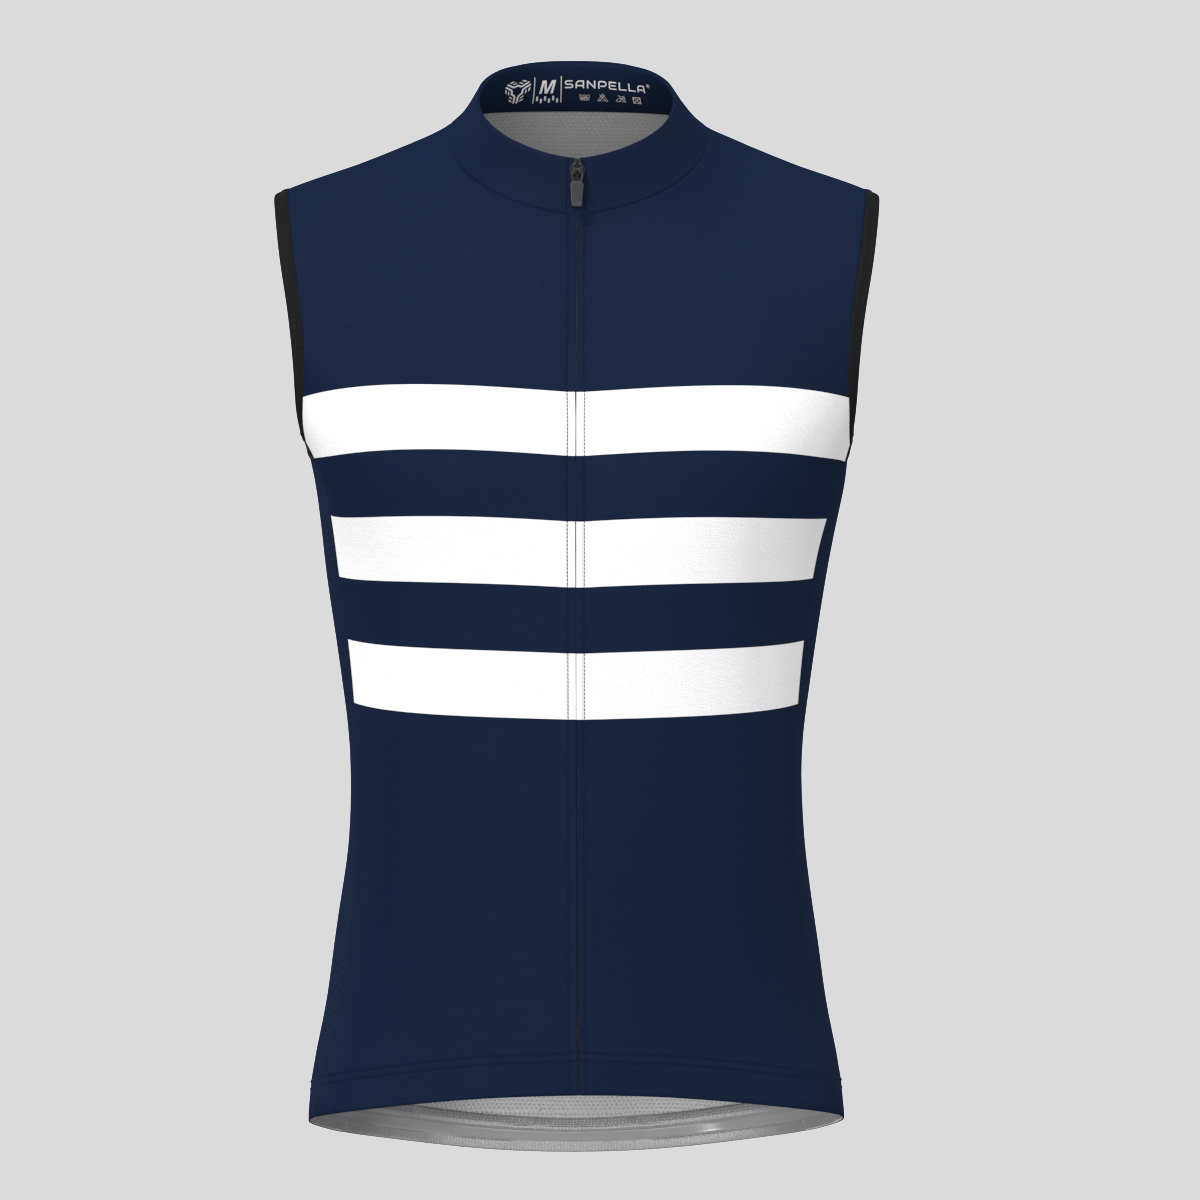 Minimal Stripes Men's Sleeveless Cycling Jersey - Navy/White